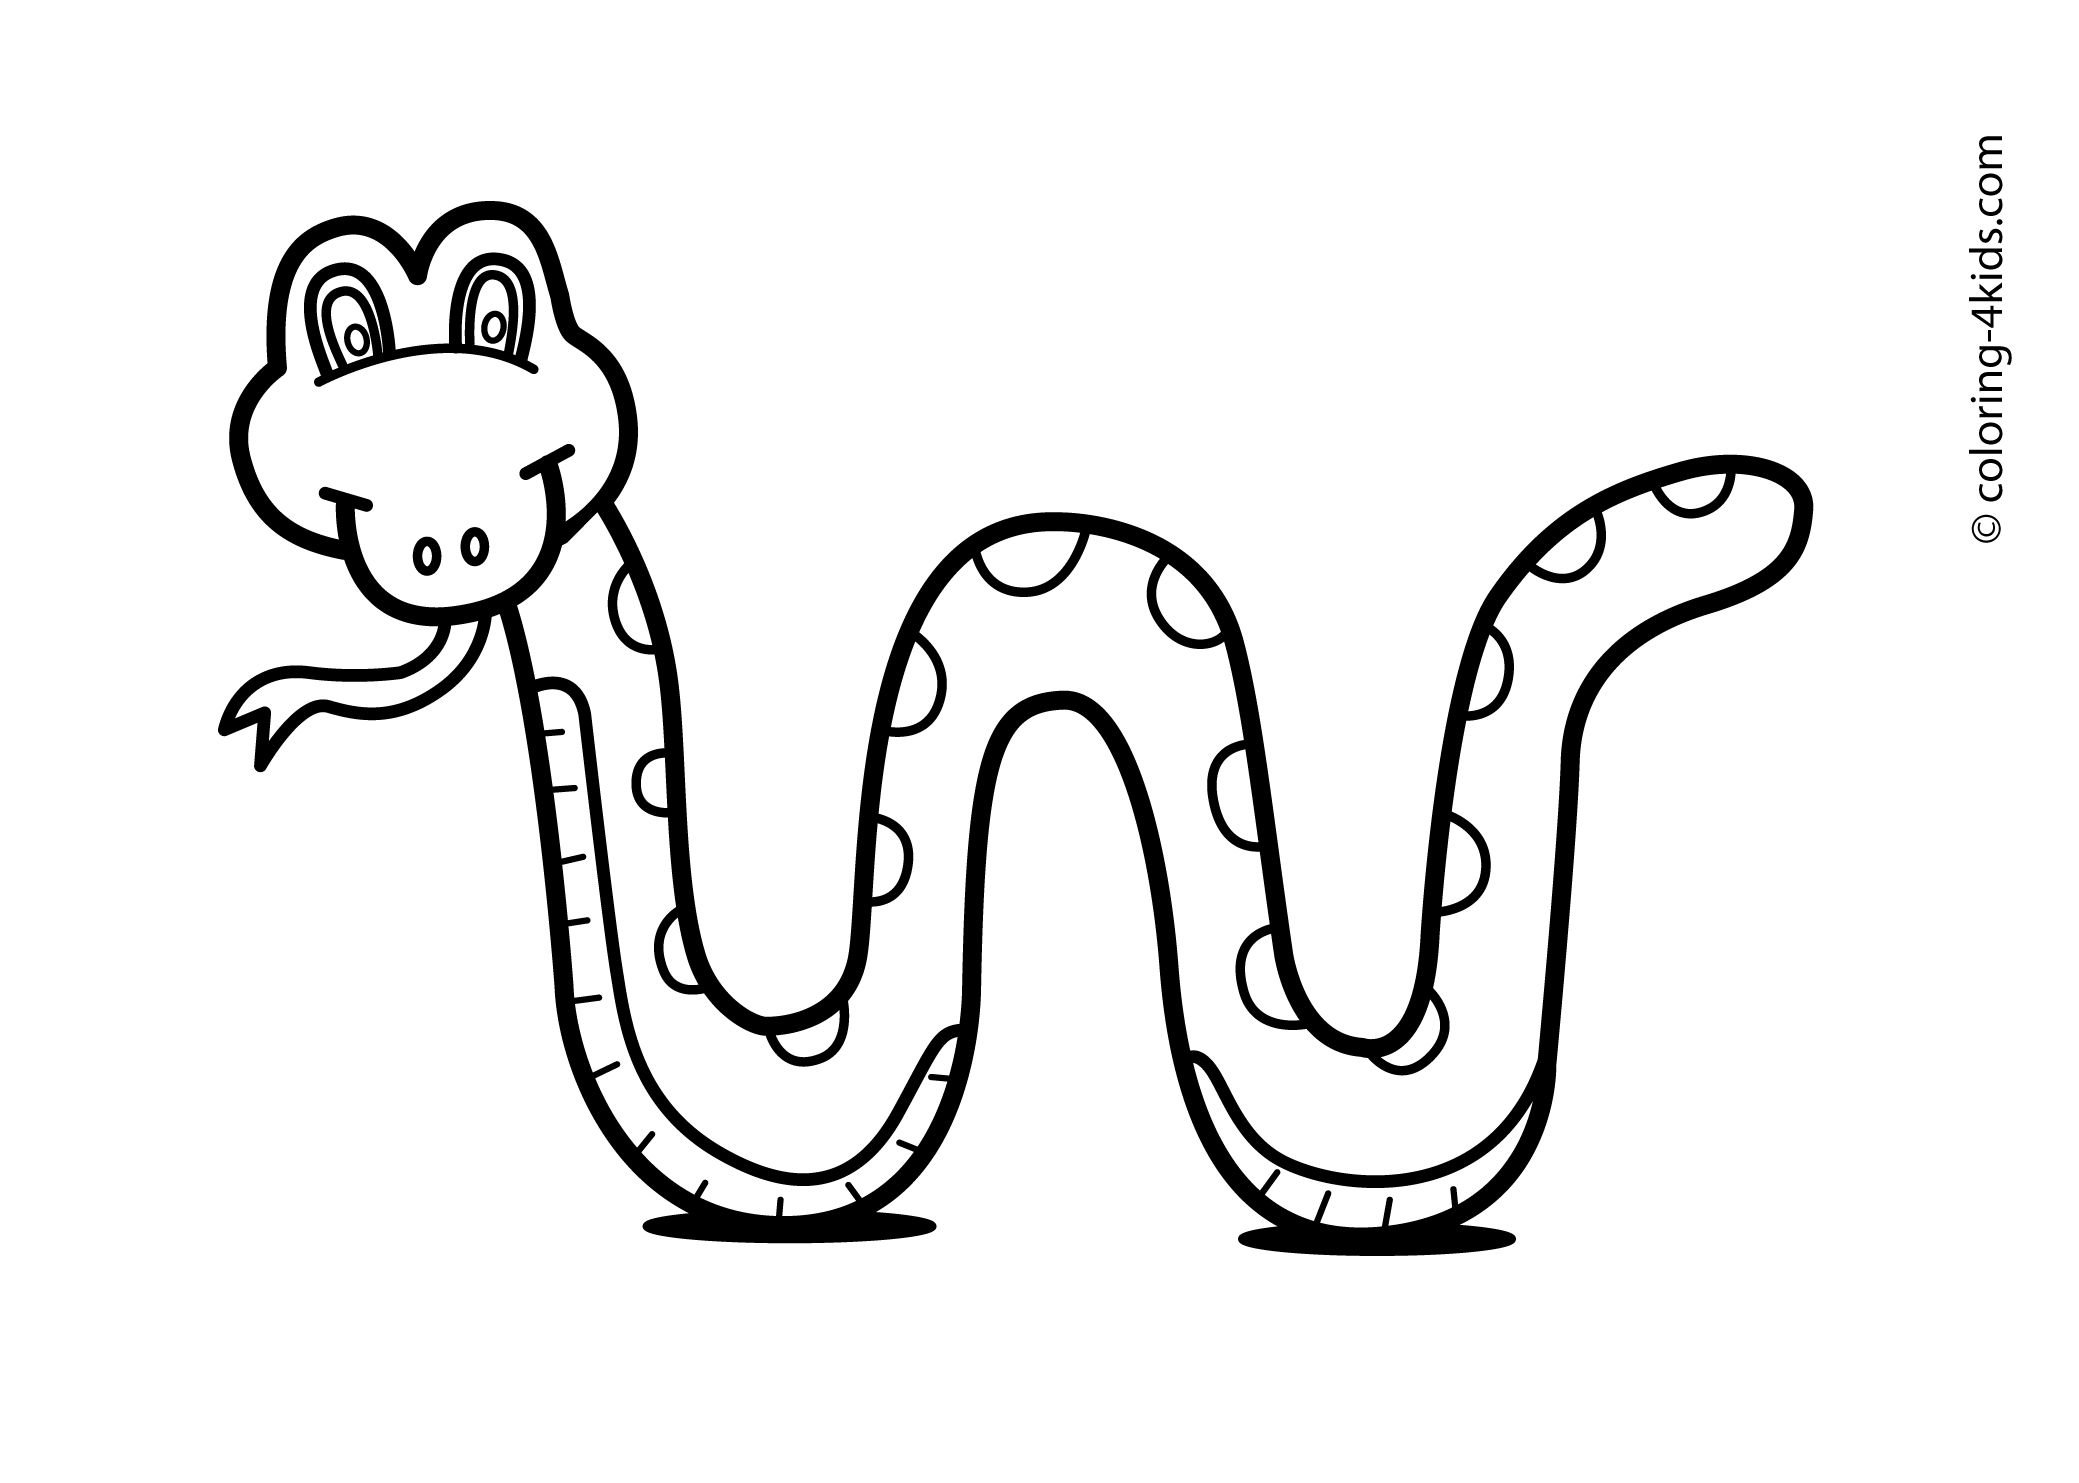 Змея раскраска. Змея раскраска для детей. Раскраска змеи для детей. Змея картинка раскраска. Раскраска змей для детей